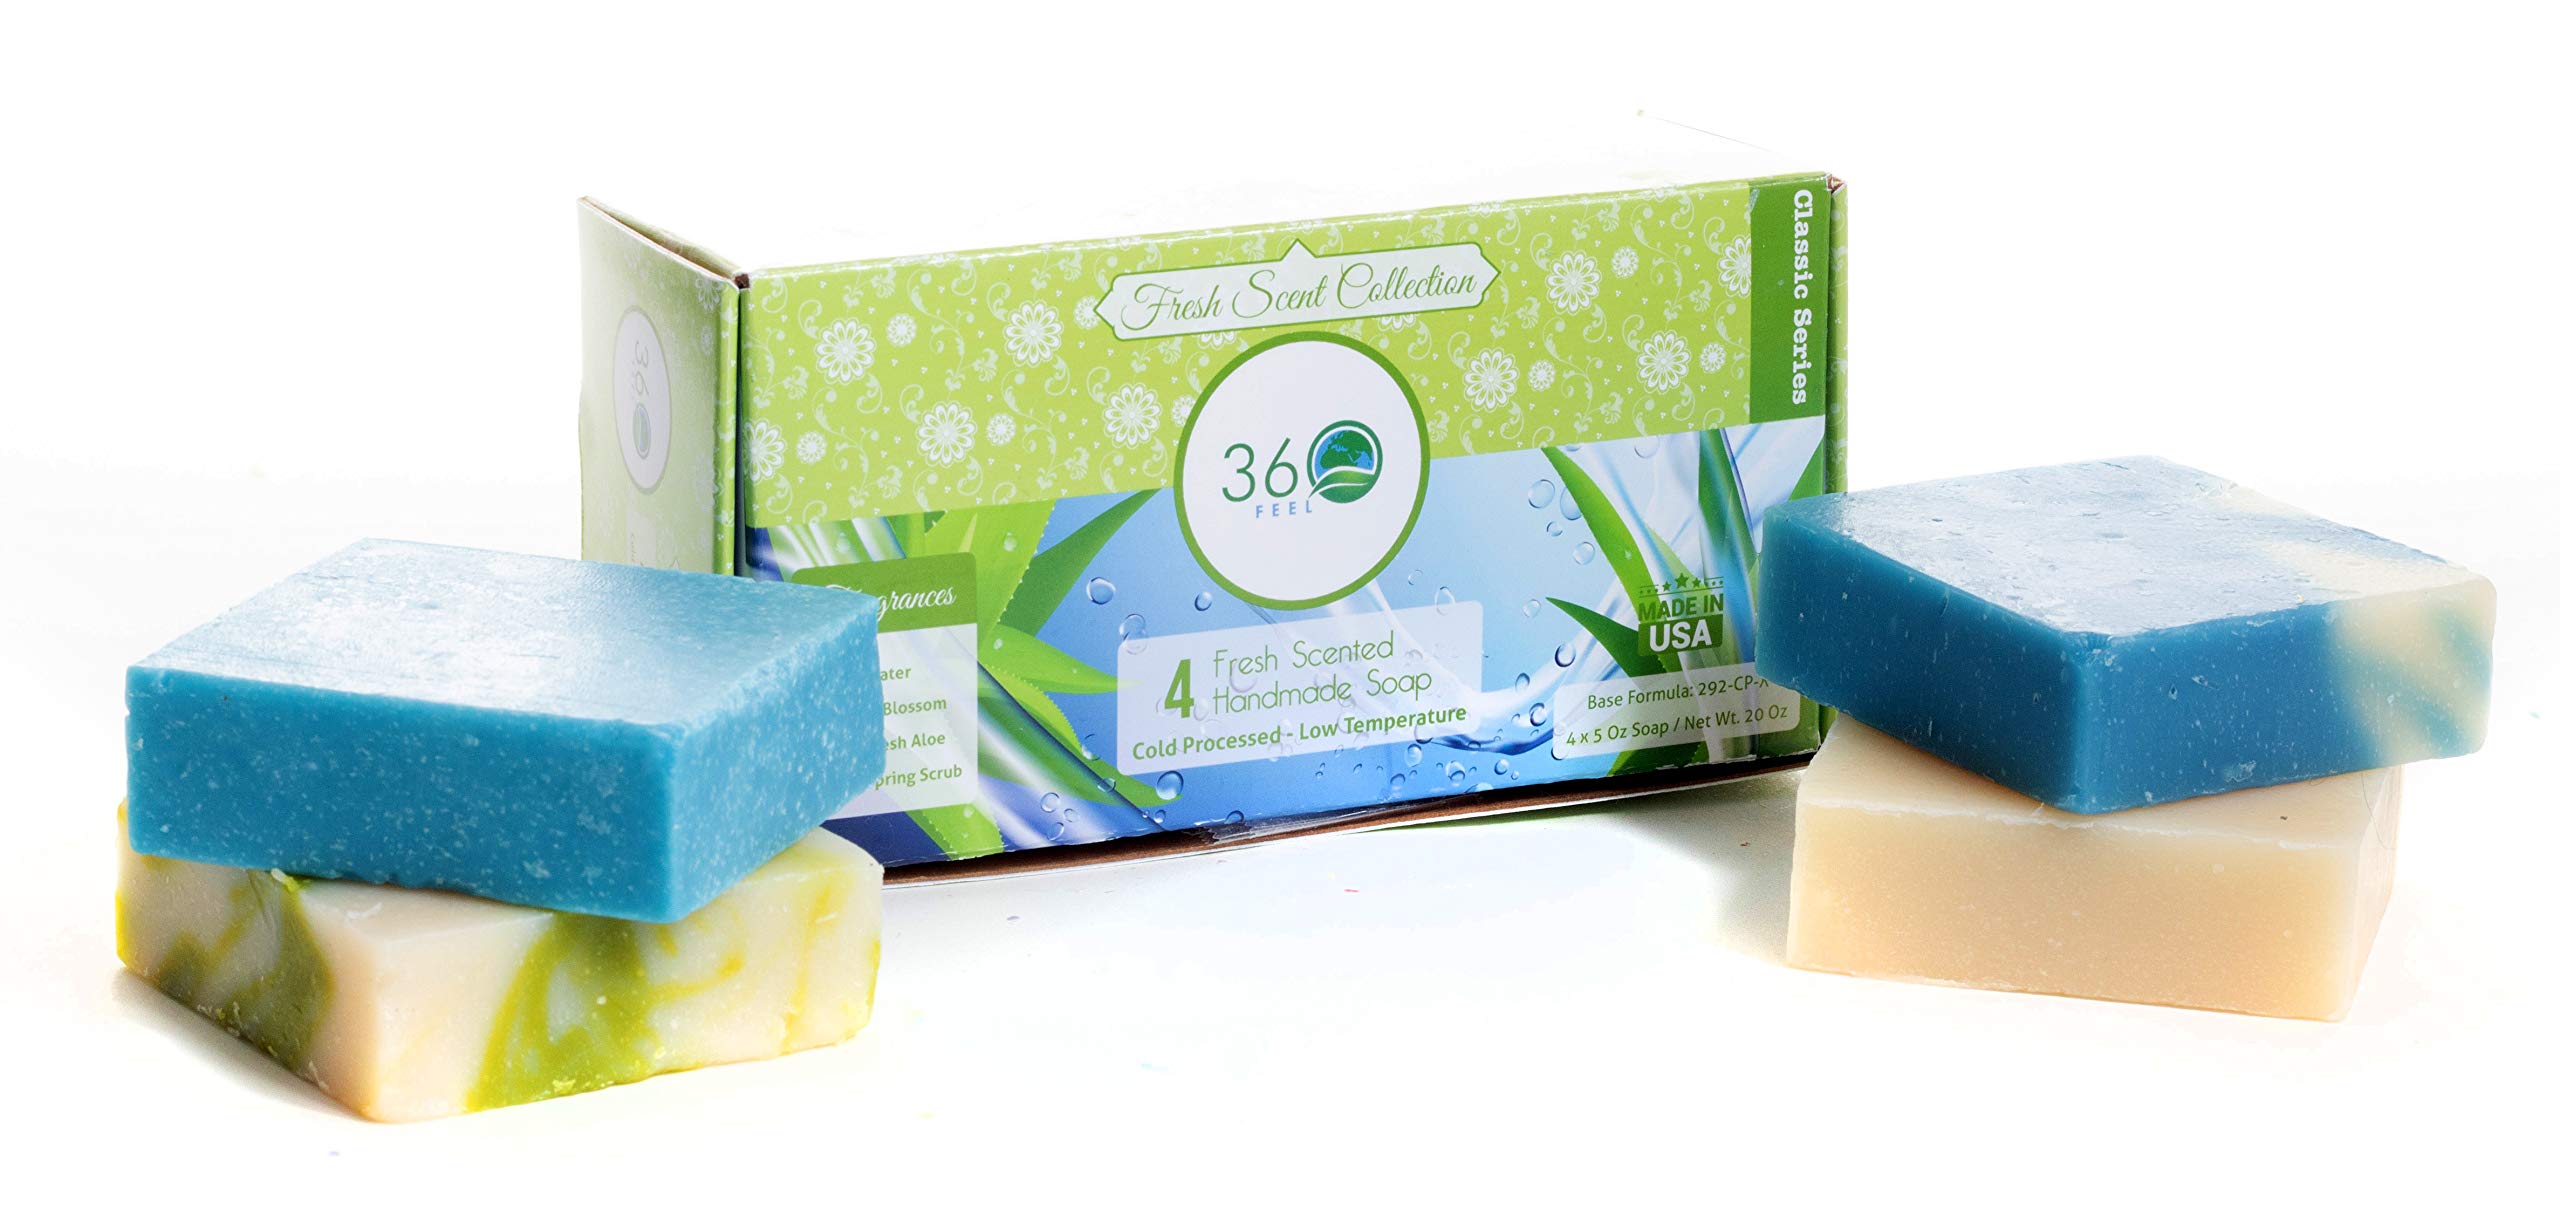 360Feel Fresh Scent Soap bars- Aloe Vera, Cotton Blossom, Spring Scrub- Anniversary Wedding Gift Set - Handmade Natural Organic Soaps Essential Oil- Gift ready box, 4 count (Pack of 1)